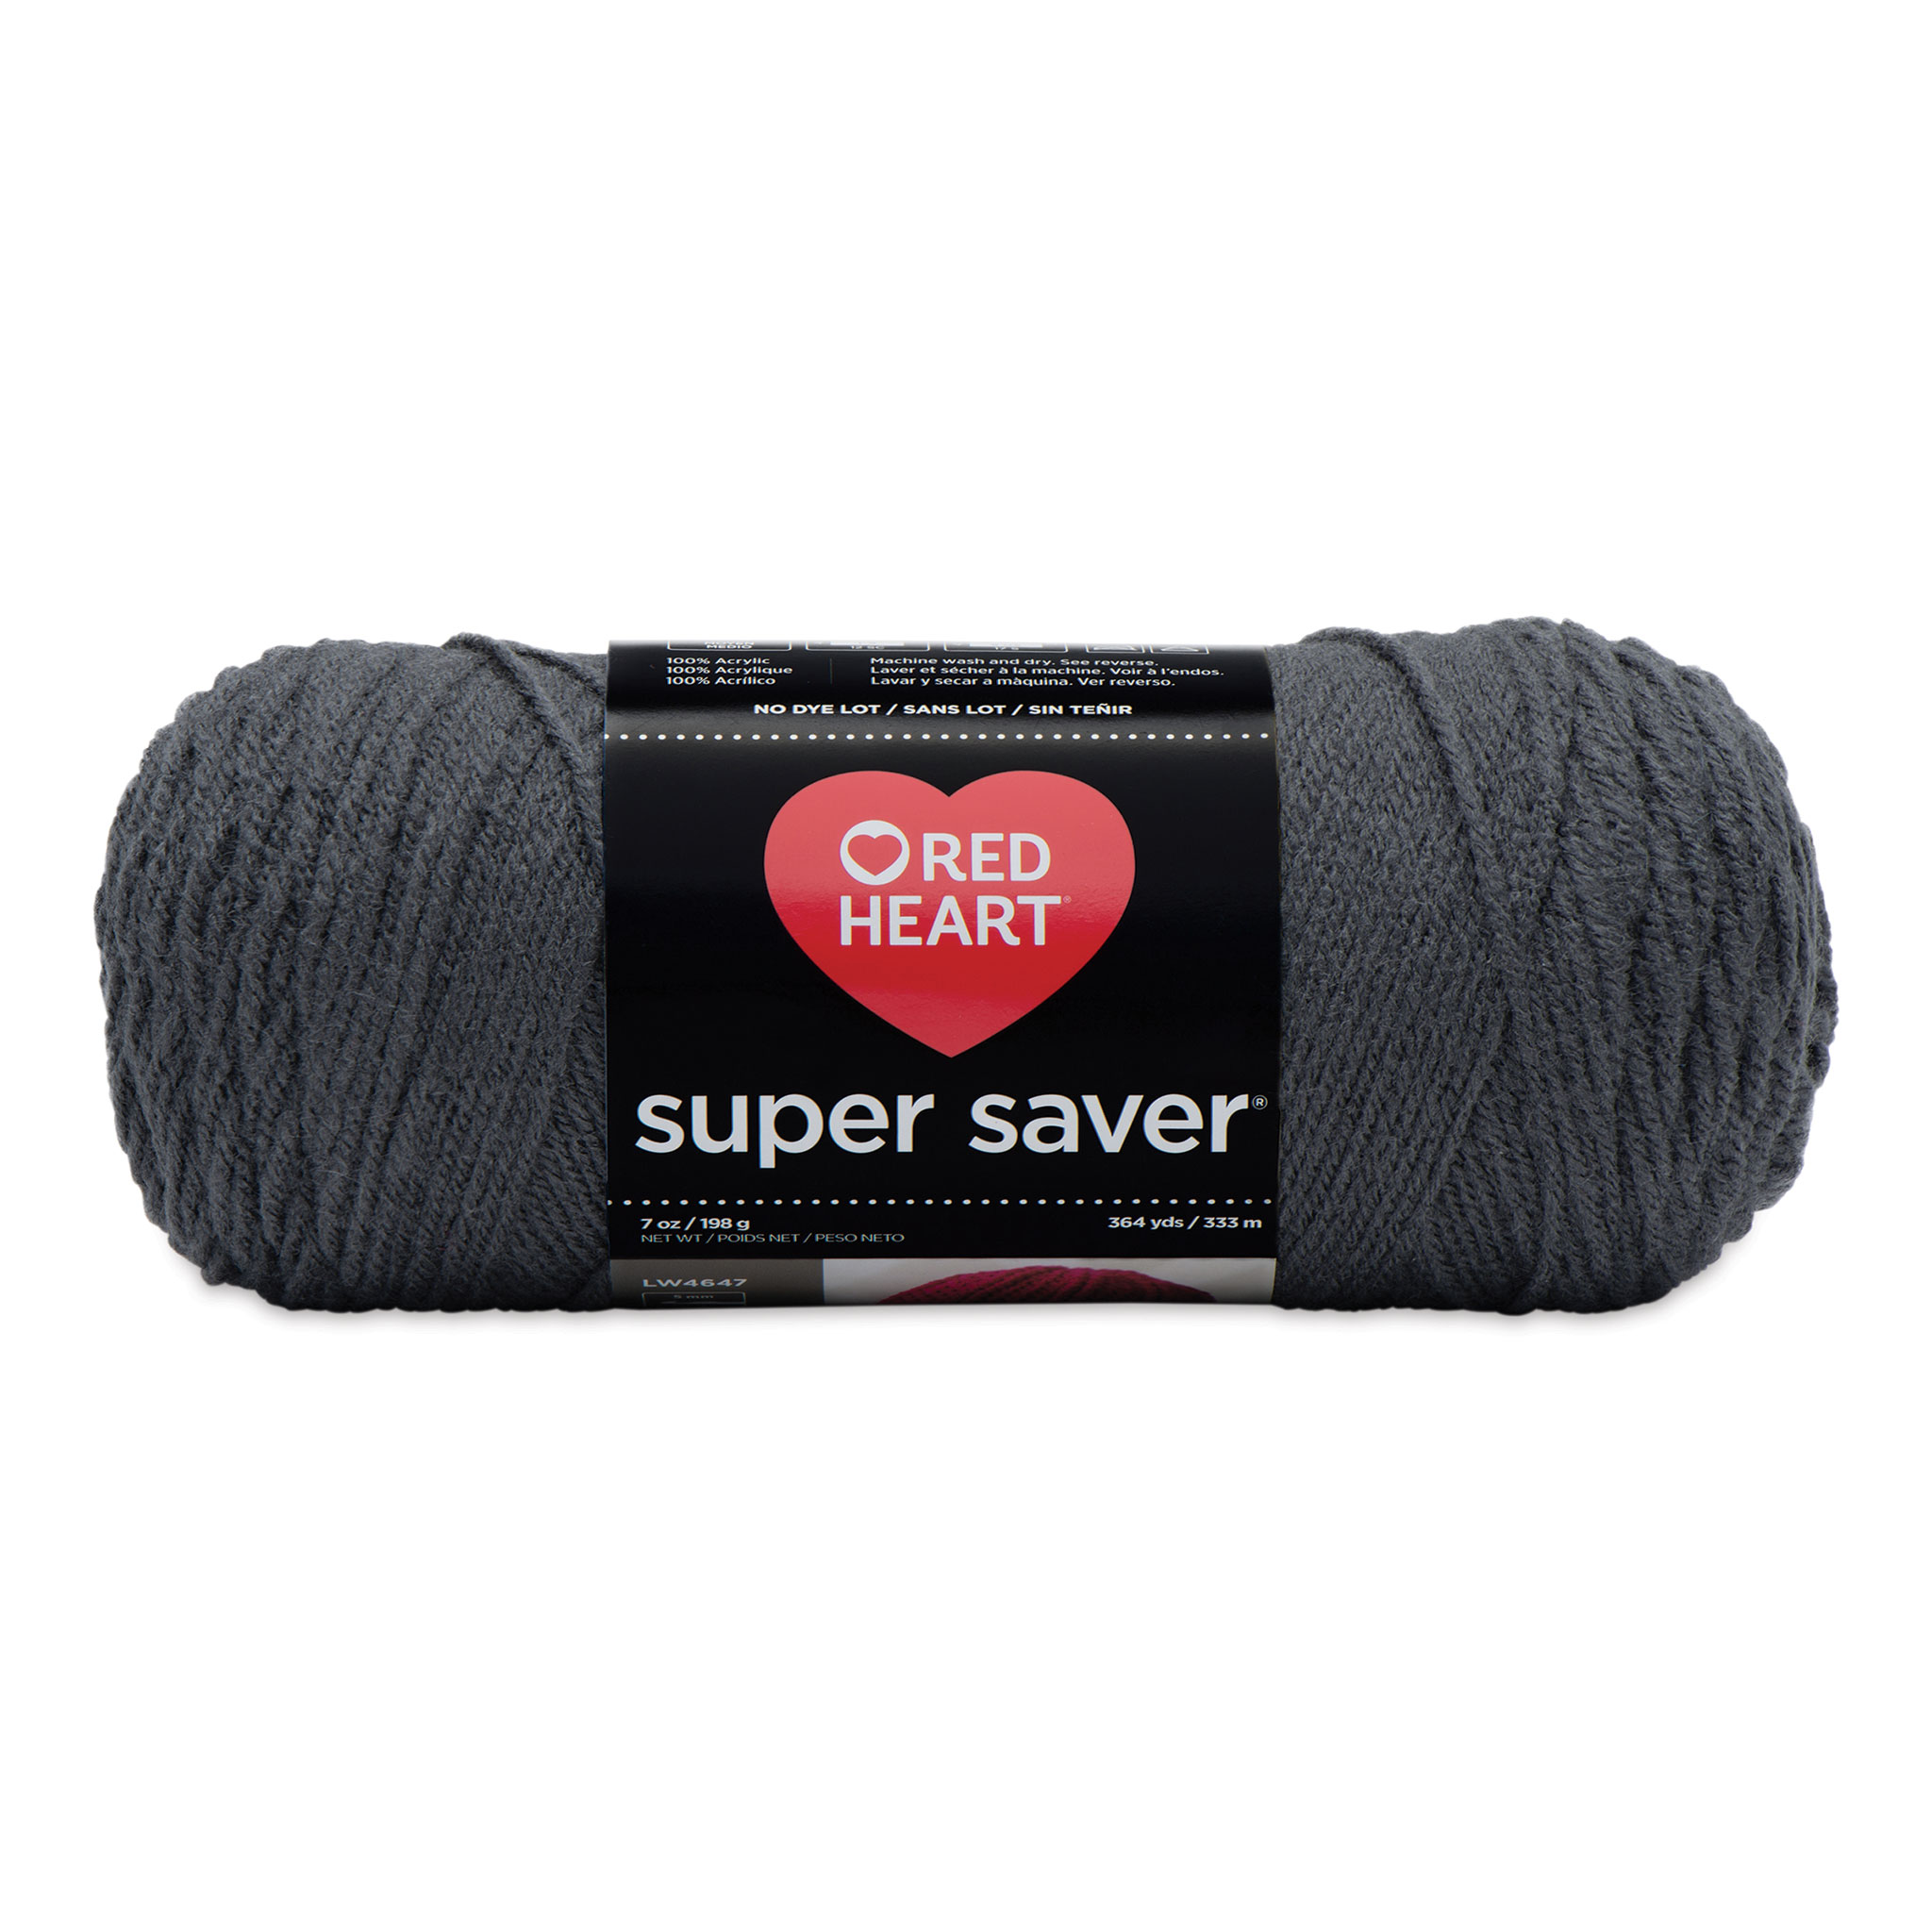 RED HEART Super Saver Yarn, White